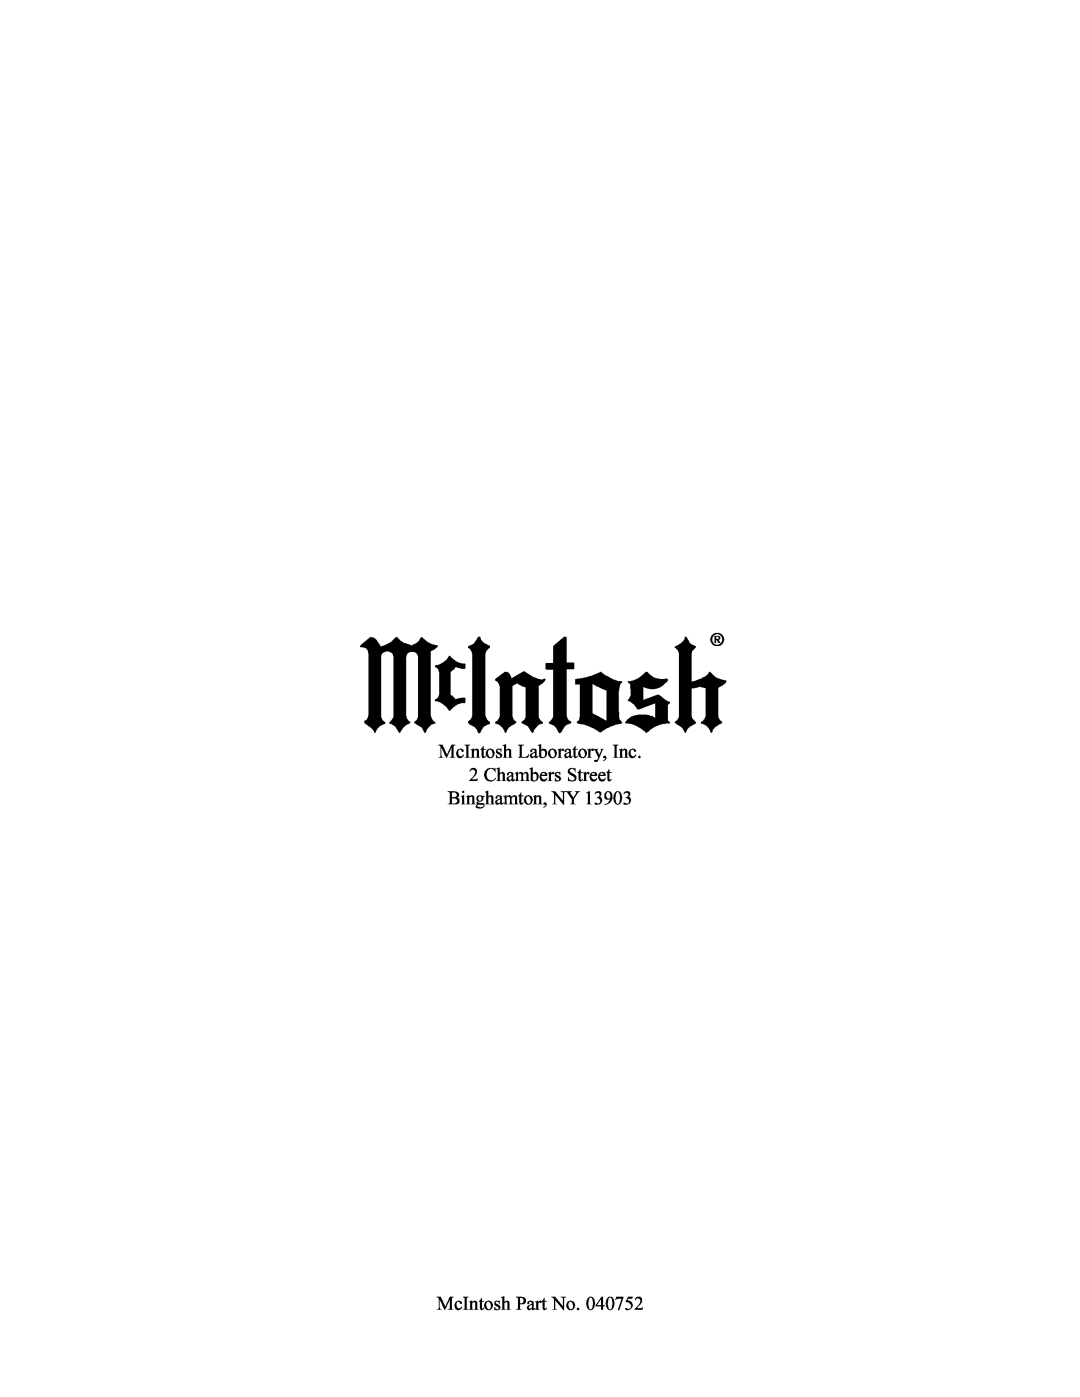 McIntosh MC206 manual McIntosh Laboratory, Inc 2 Chambers Street, Binghamton, NY, McIntosh Part No 